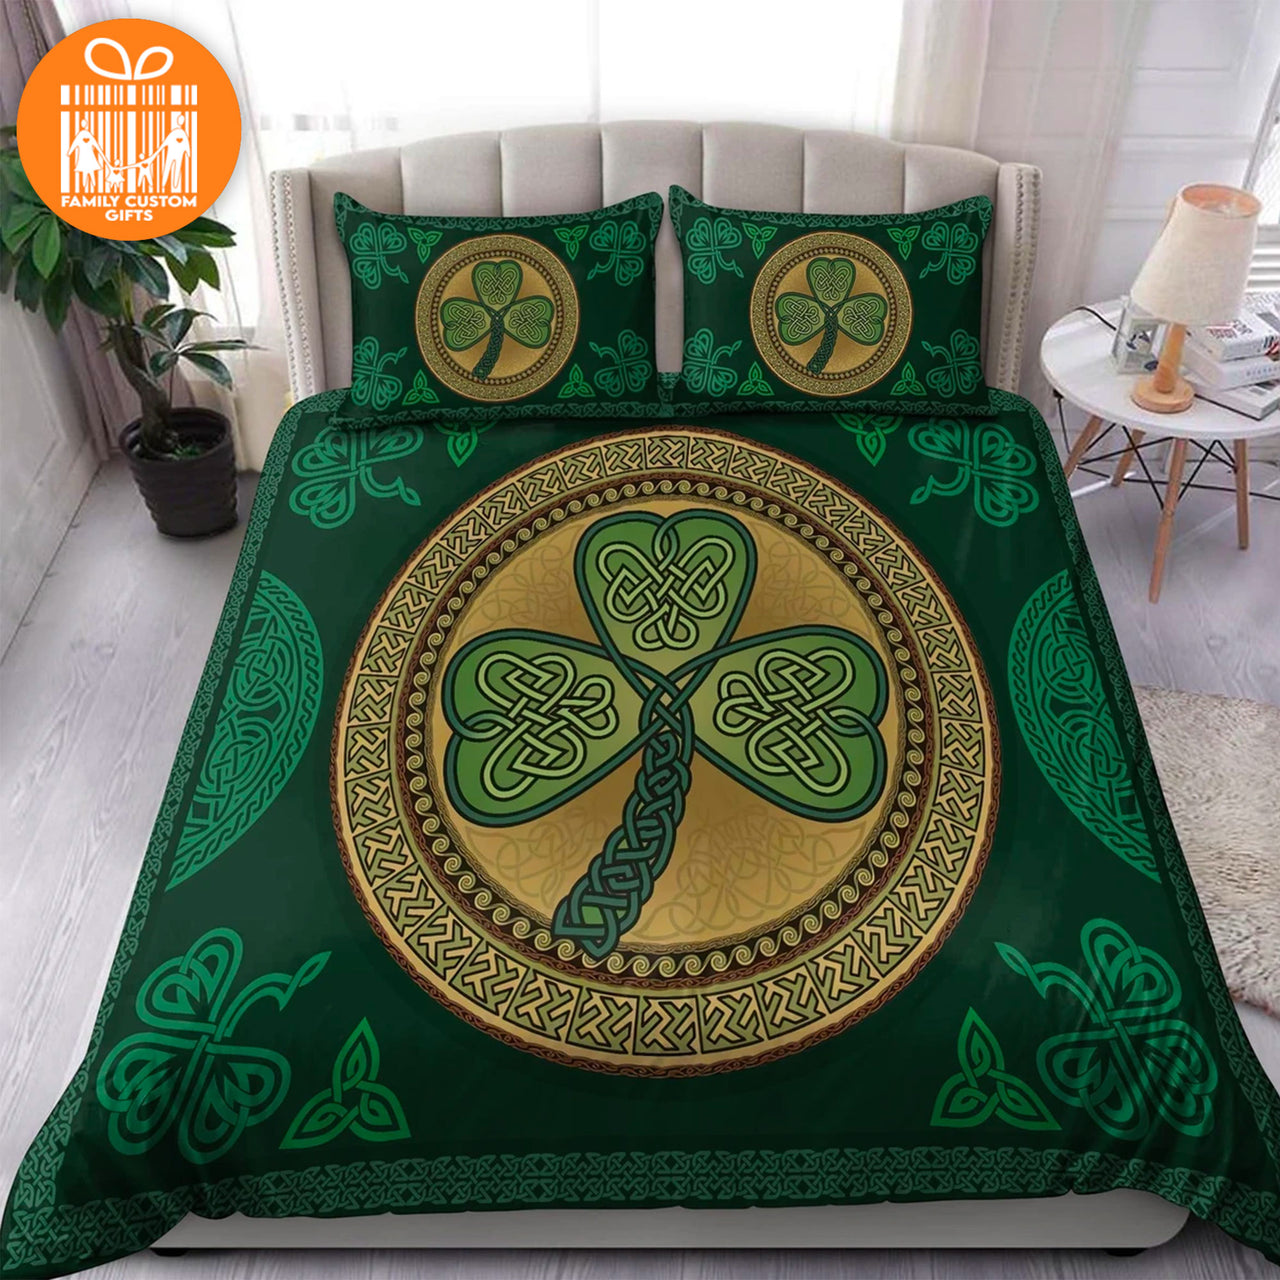 Comforter St. Patrick's Day Irish Shamrocks Custom Bedding Set for Kids Teens Adult Premium Bed Set